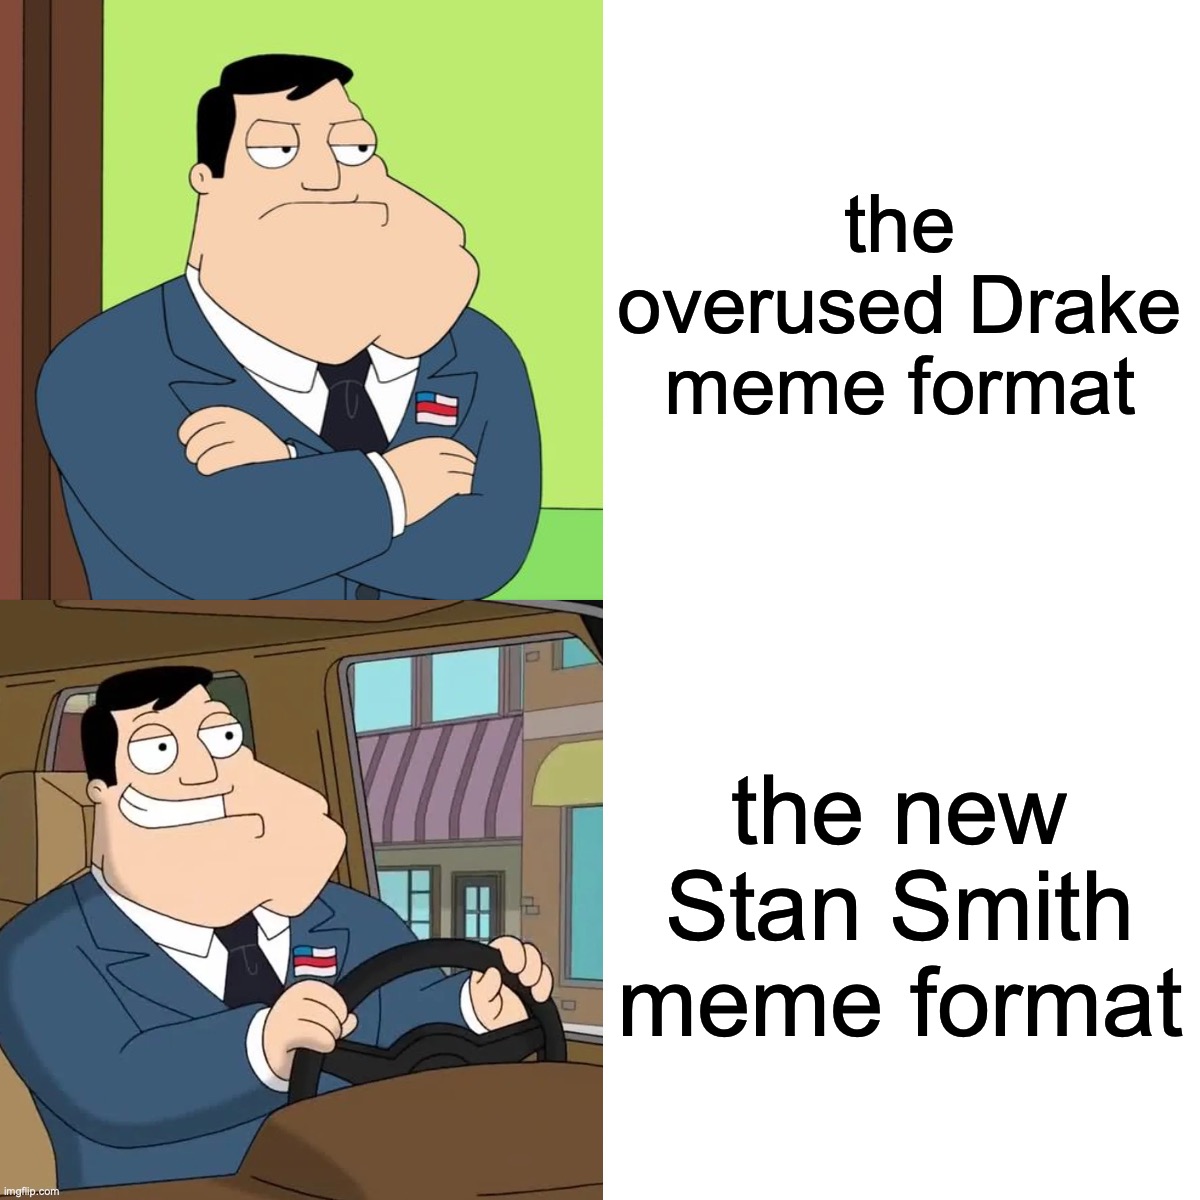 Stan Smith Drake Meme | the overused Drake meme format; the new Stan Smith meme format | image tagged in drake hotline bling,memes,american dad,seth macfarlane | made w/ Imgflip meme maker